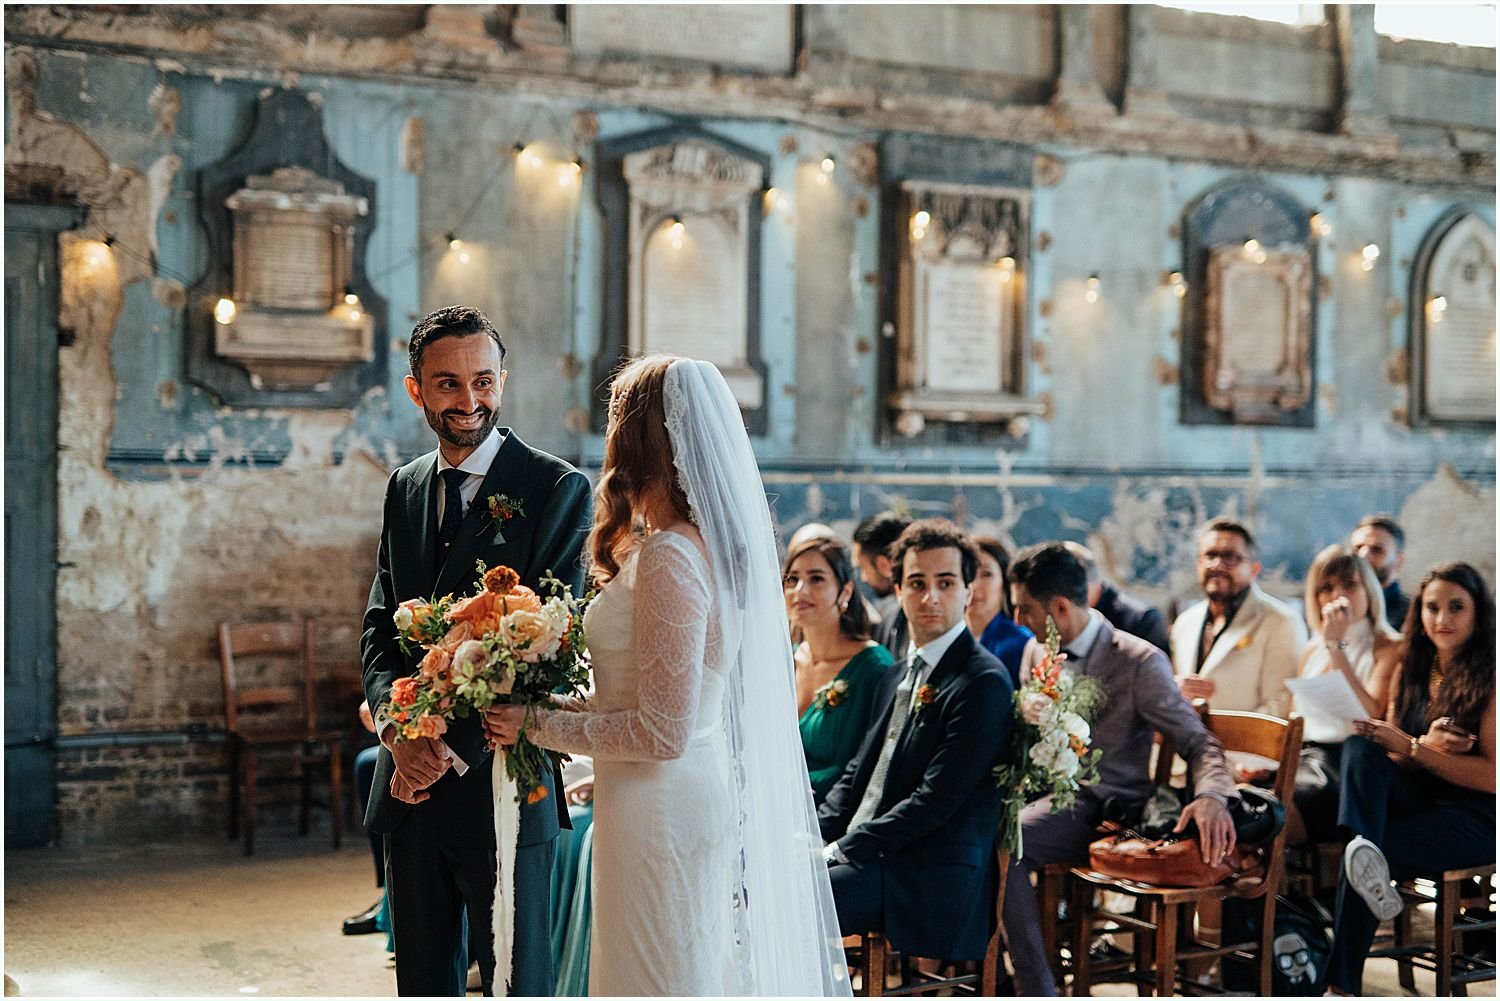 First look between bride and groom in Chapel